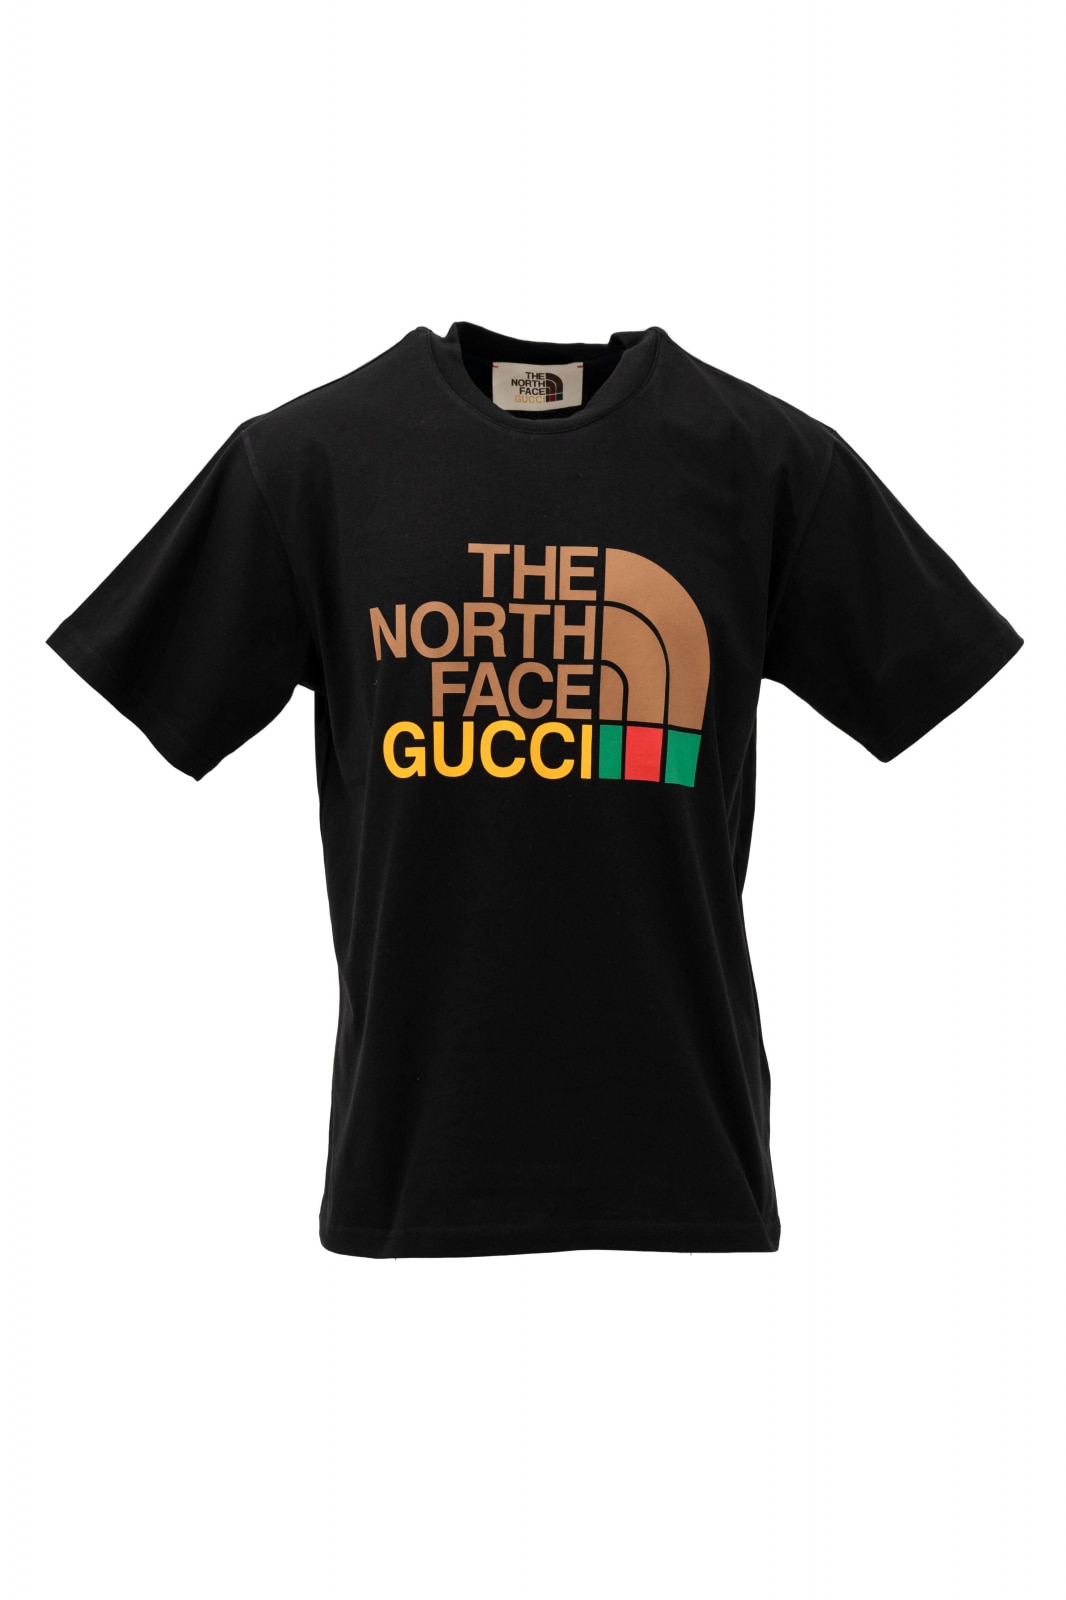 barbat, Gucci, North Face, bumbac, negru 740 - eMAG.ro